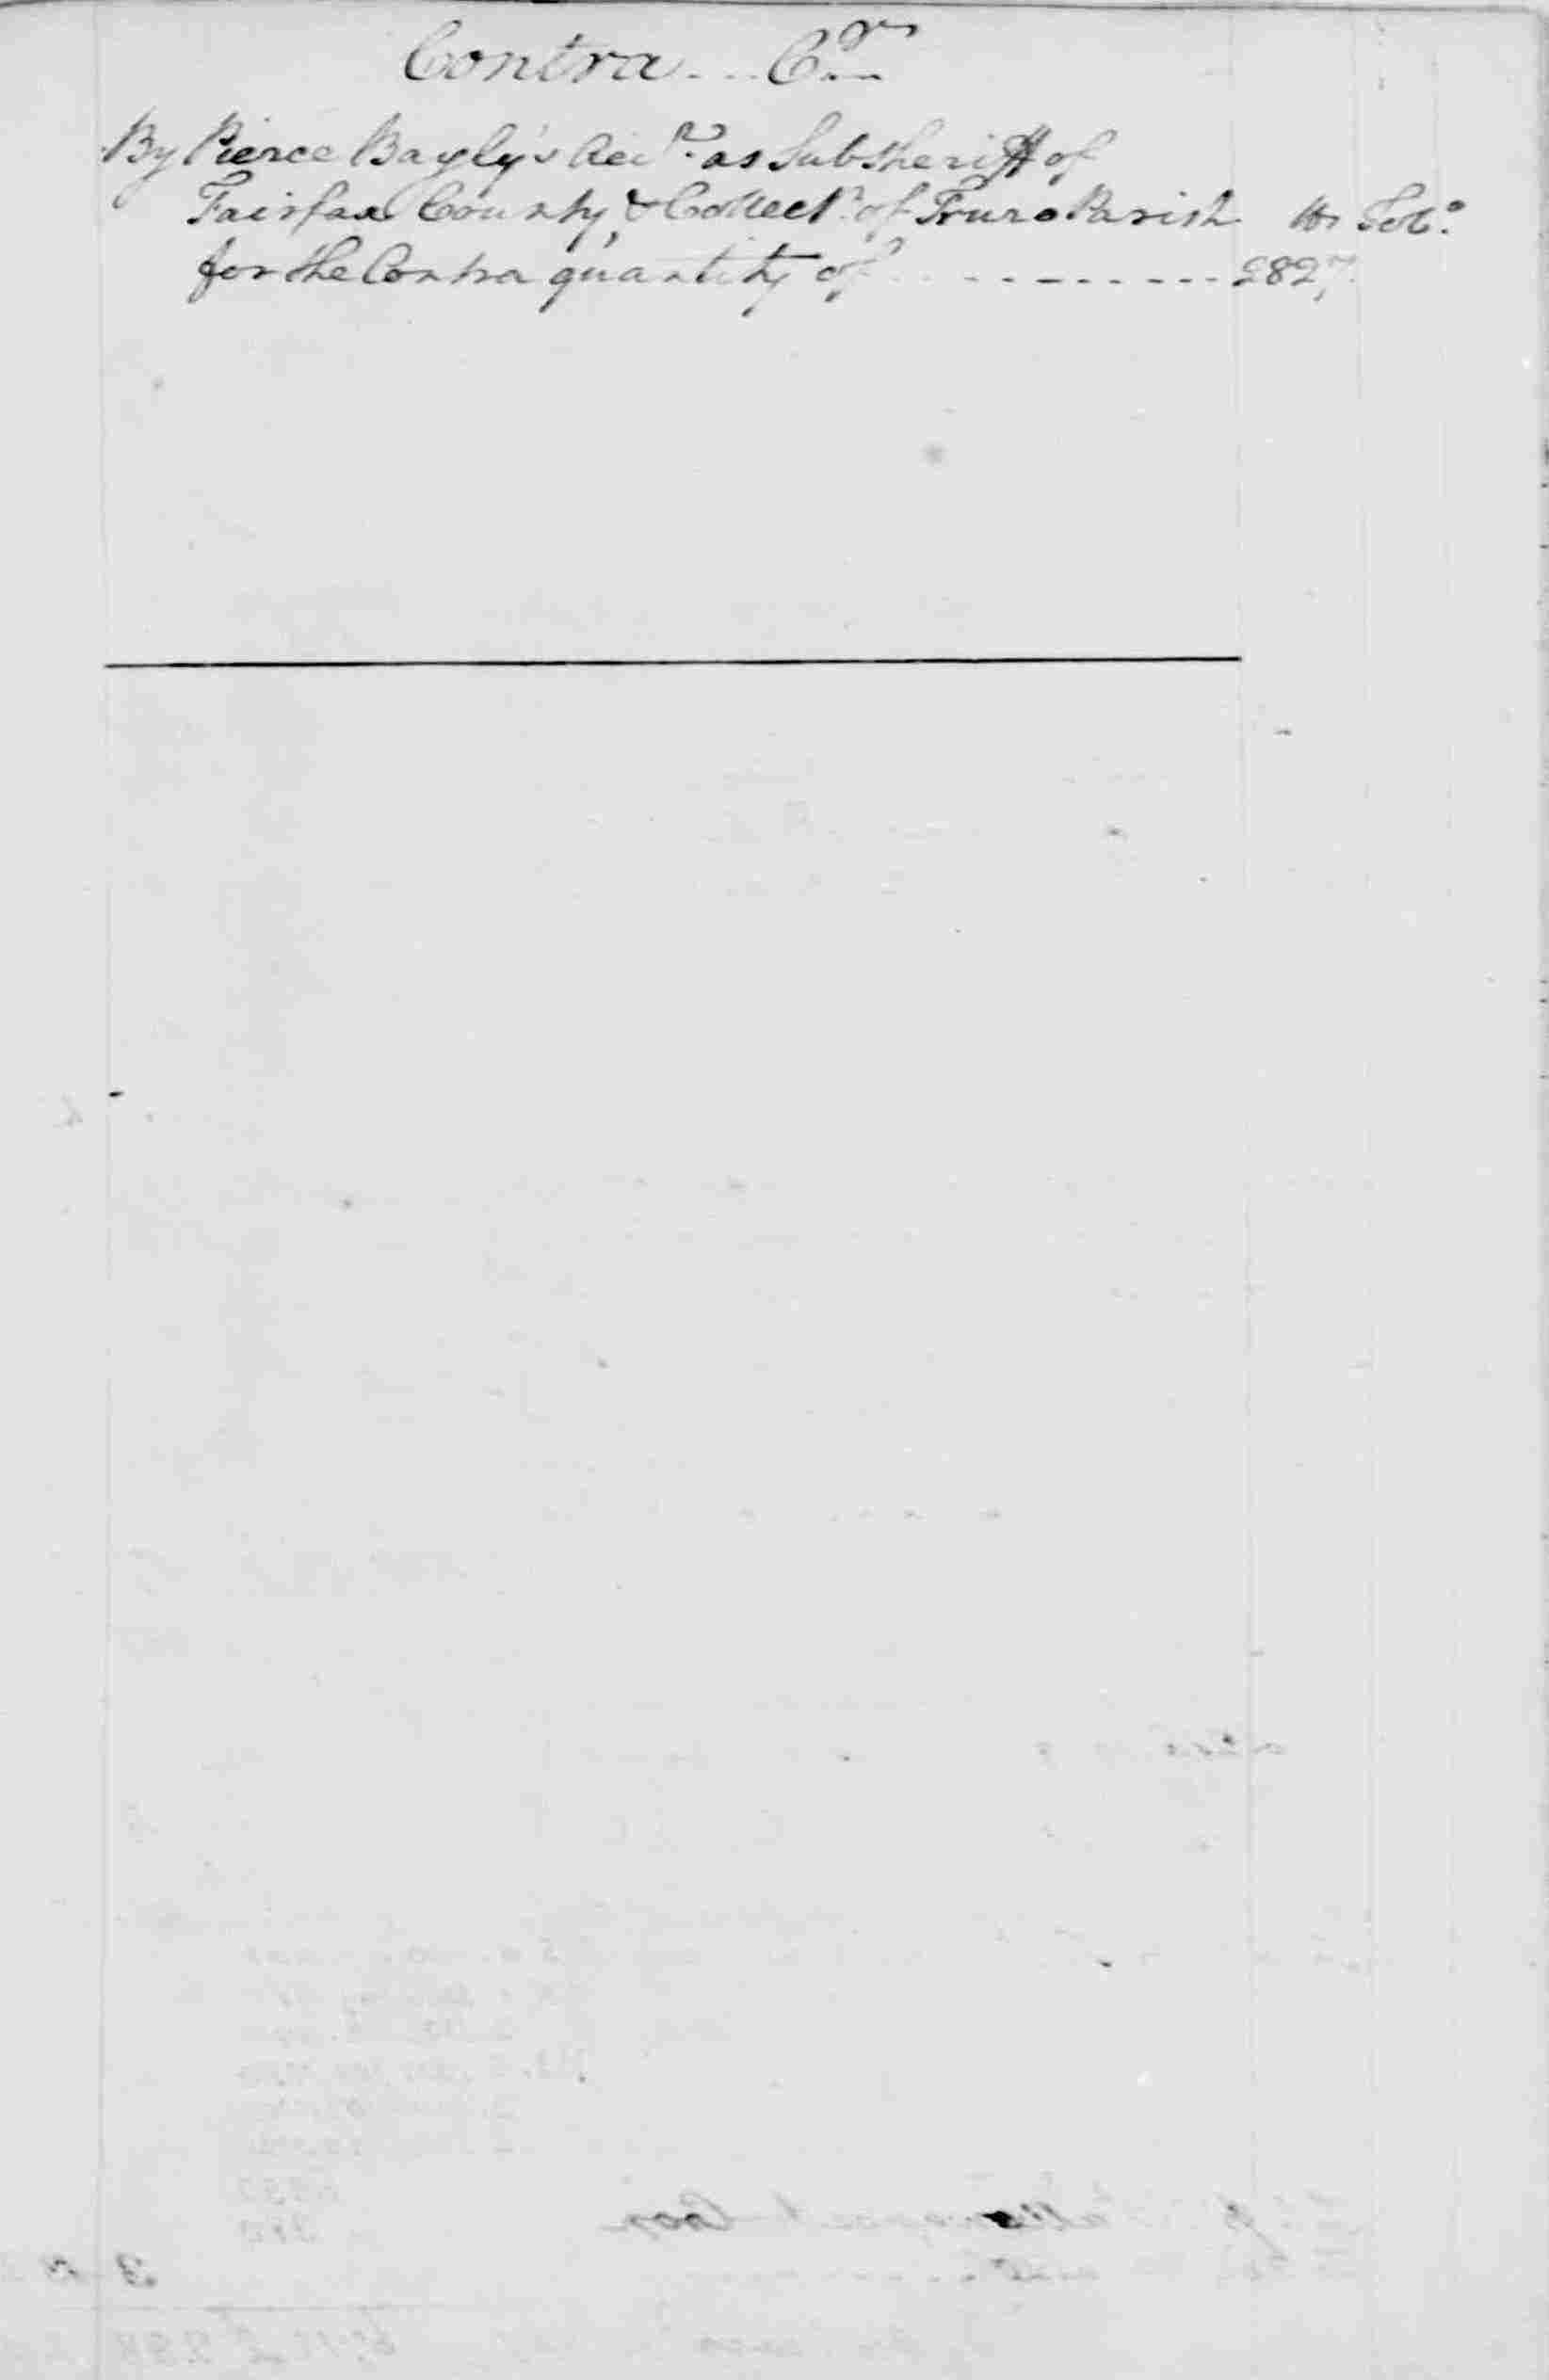 Ledger A, folio 275, right side